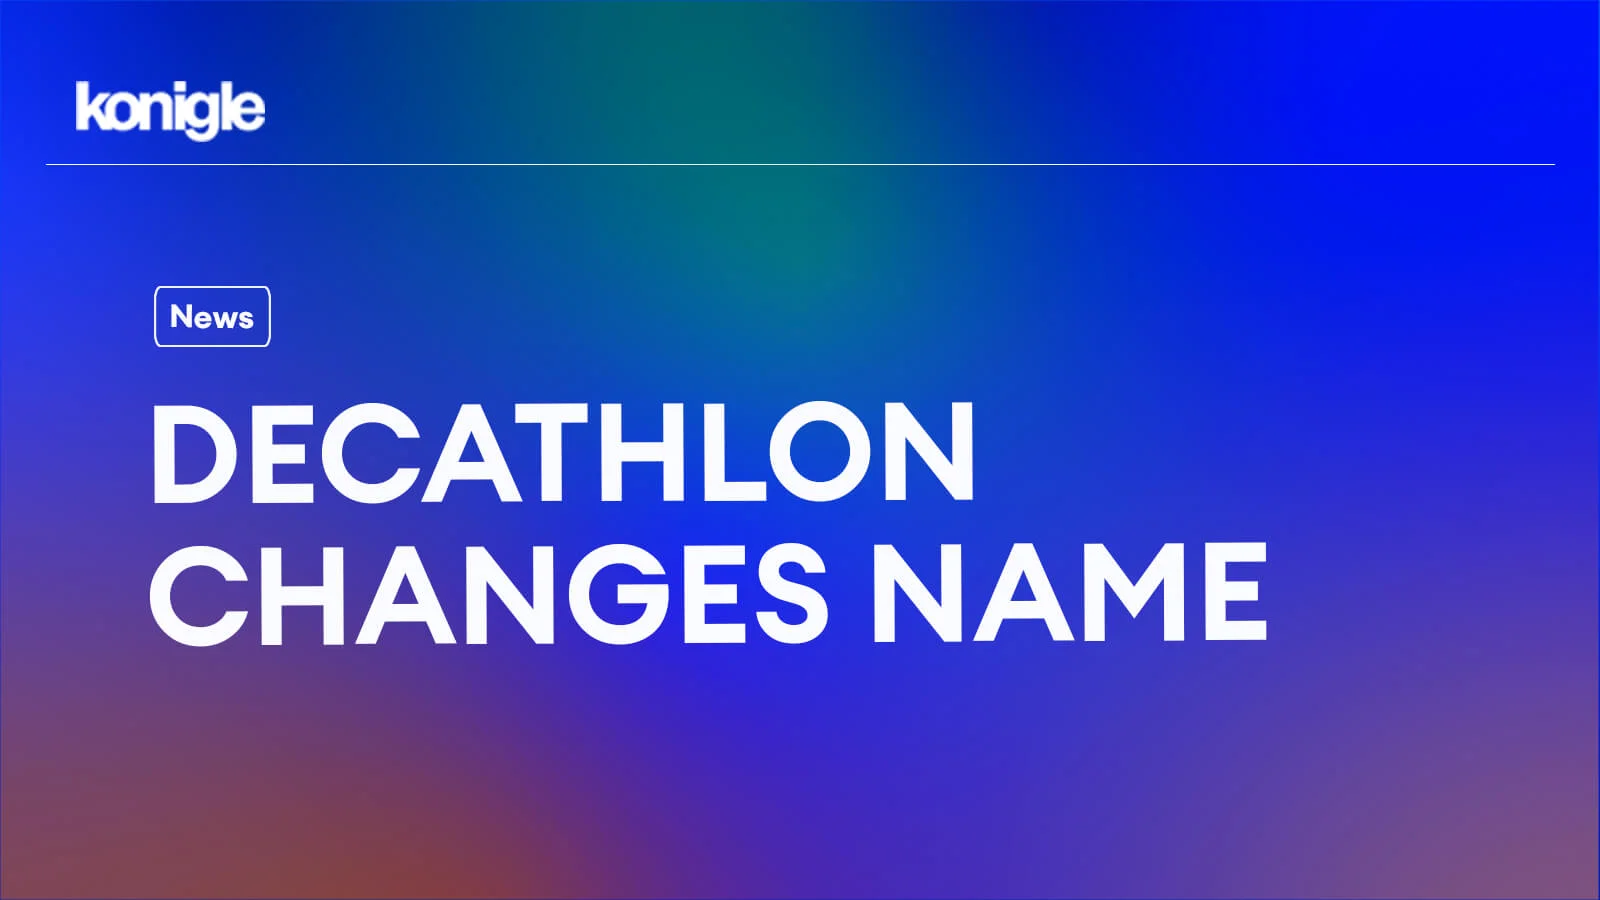 Decathlon changes name